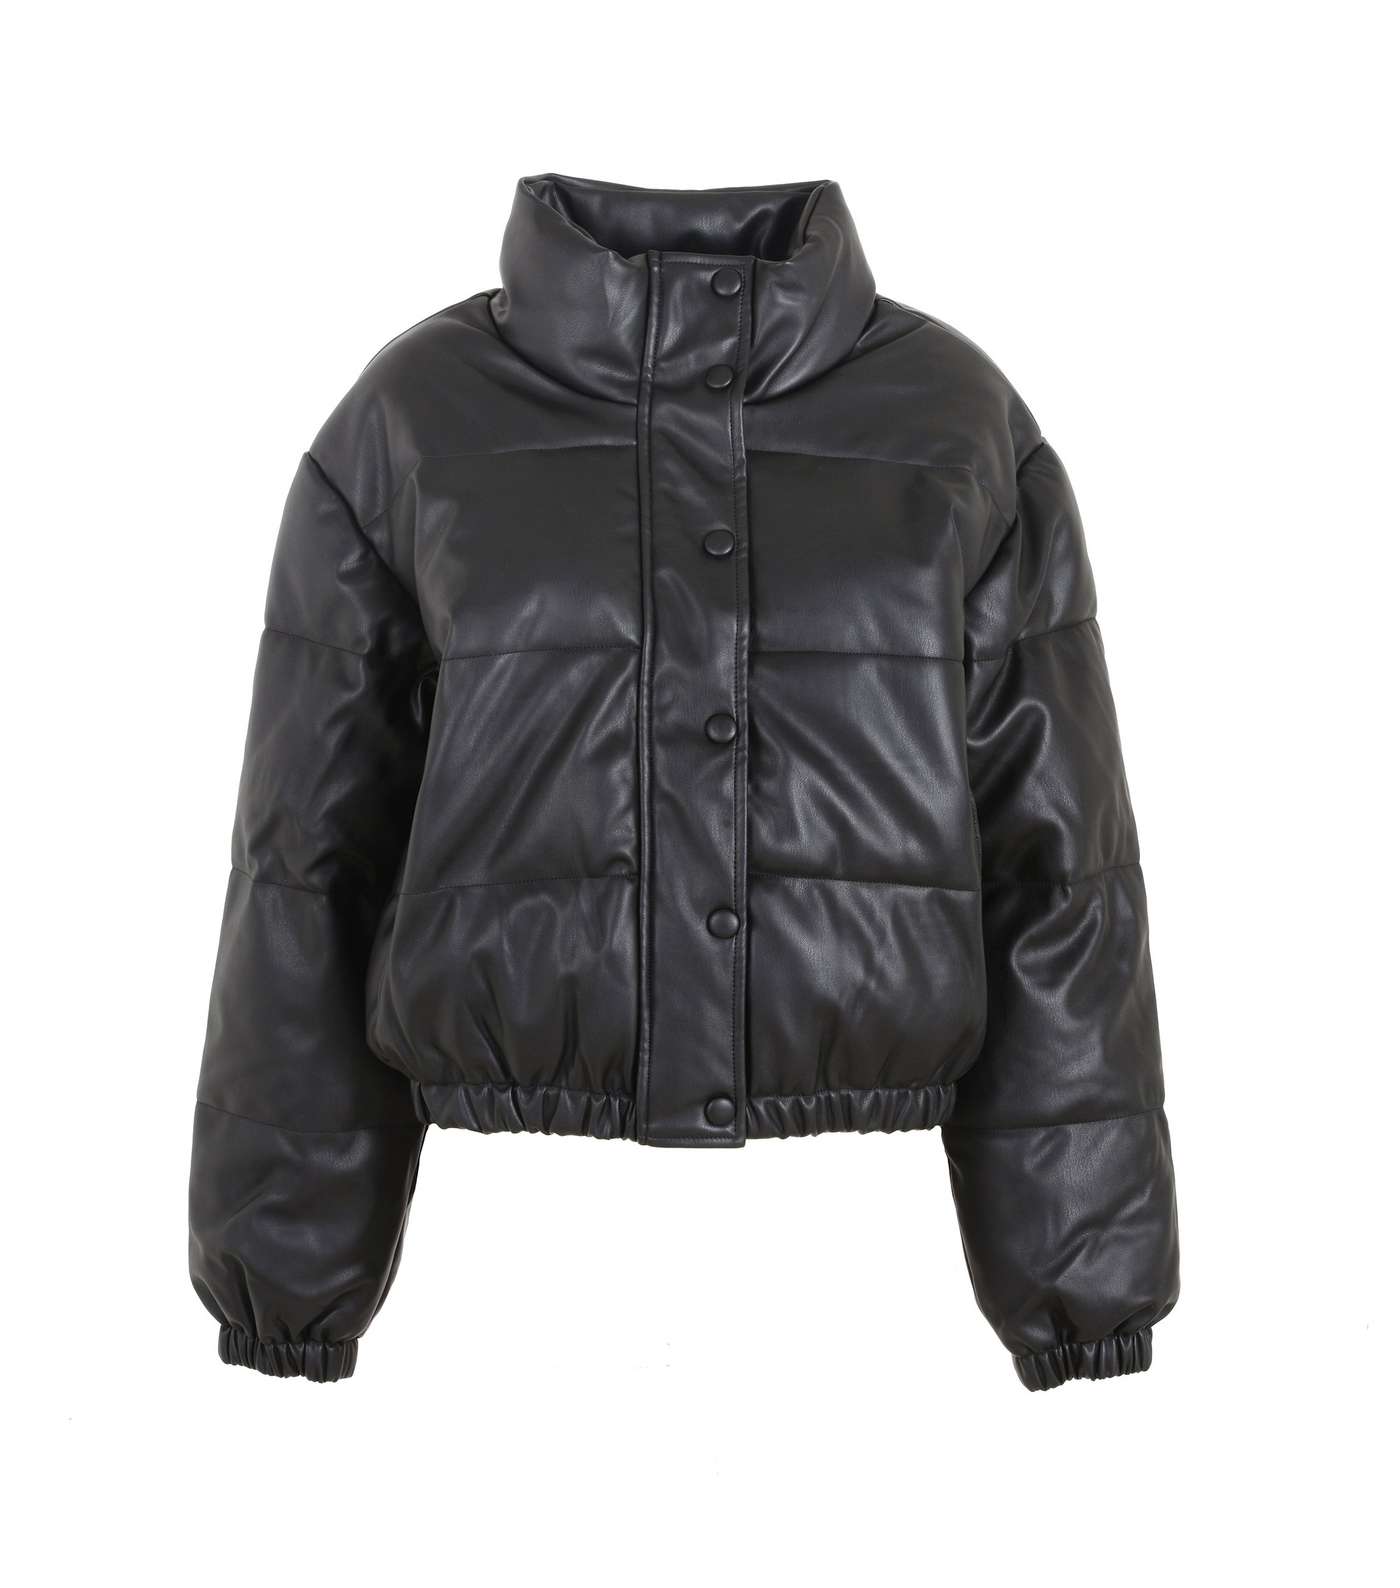 Urban Bliss Black Leather-Look Puffer Coat